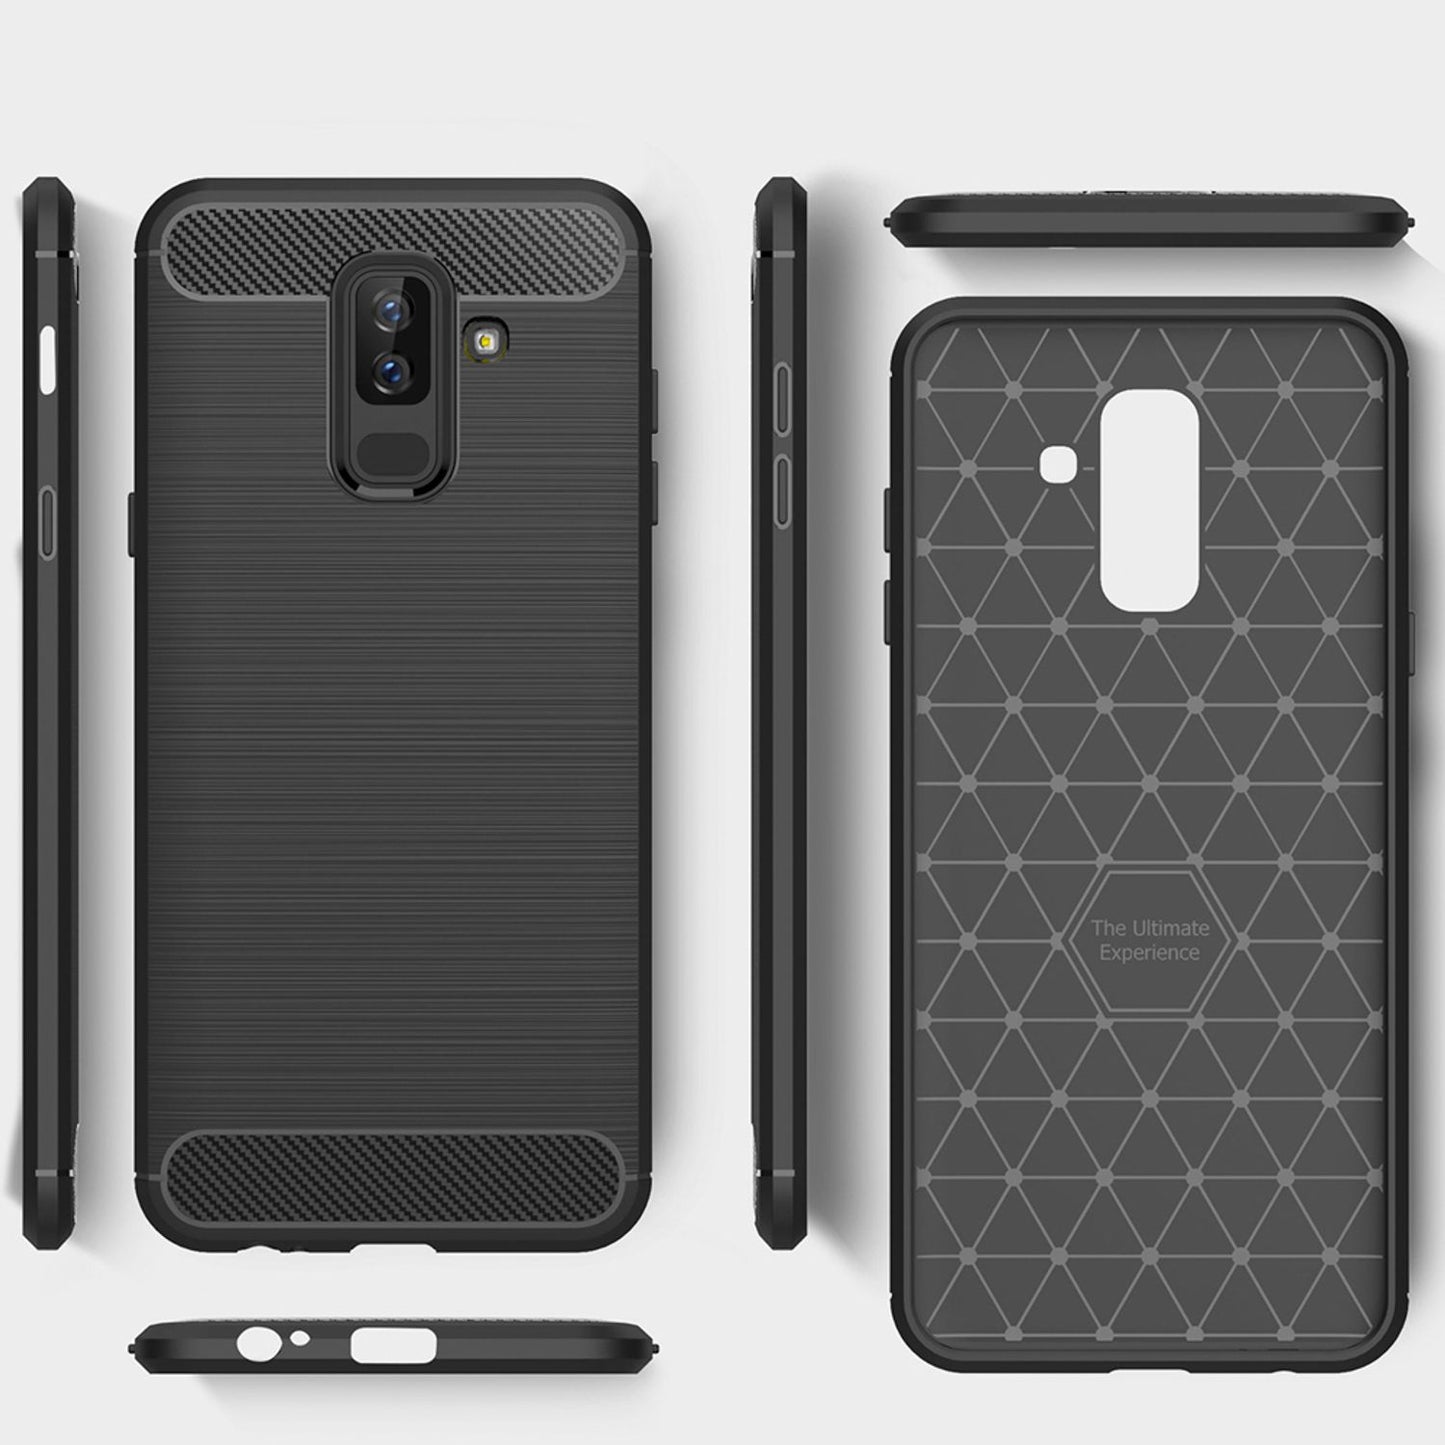 Samsung Galaxy A6 Plus Hülle Handyhülle von NALIA, Slim Silikon Case Cover